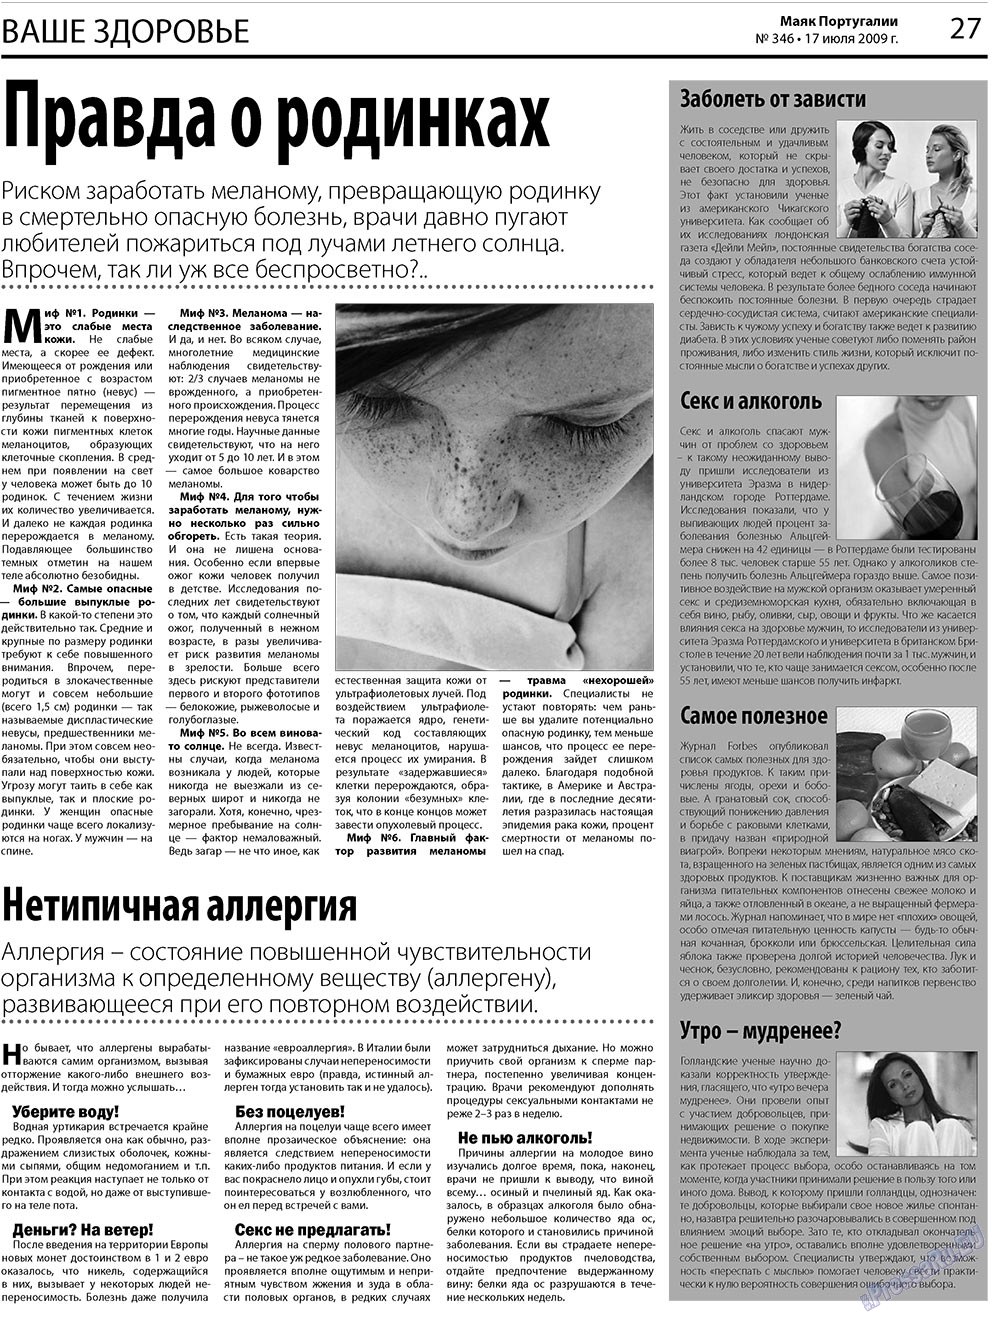 Маяк Португалии, газета. 2009 №29 стр.27